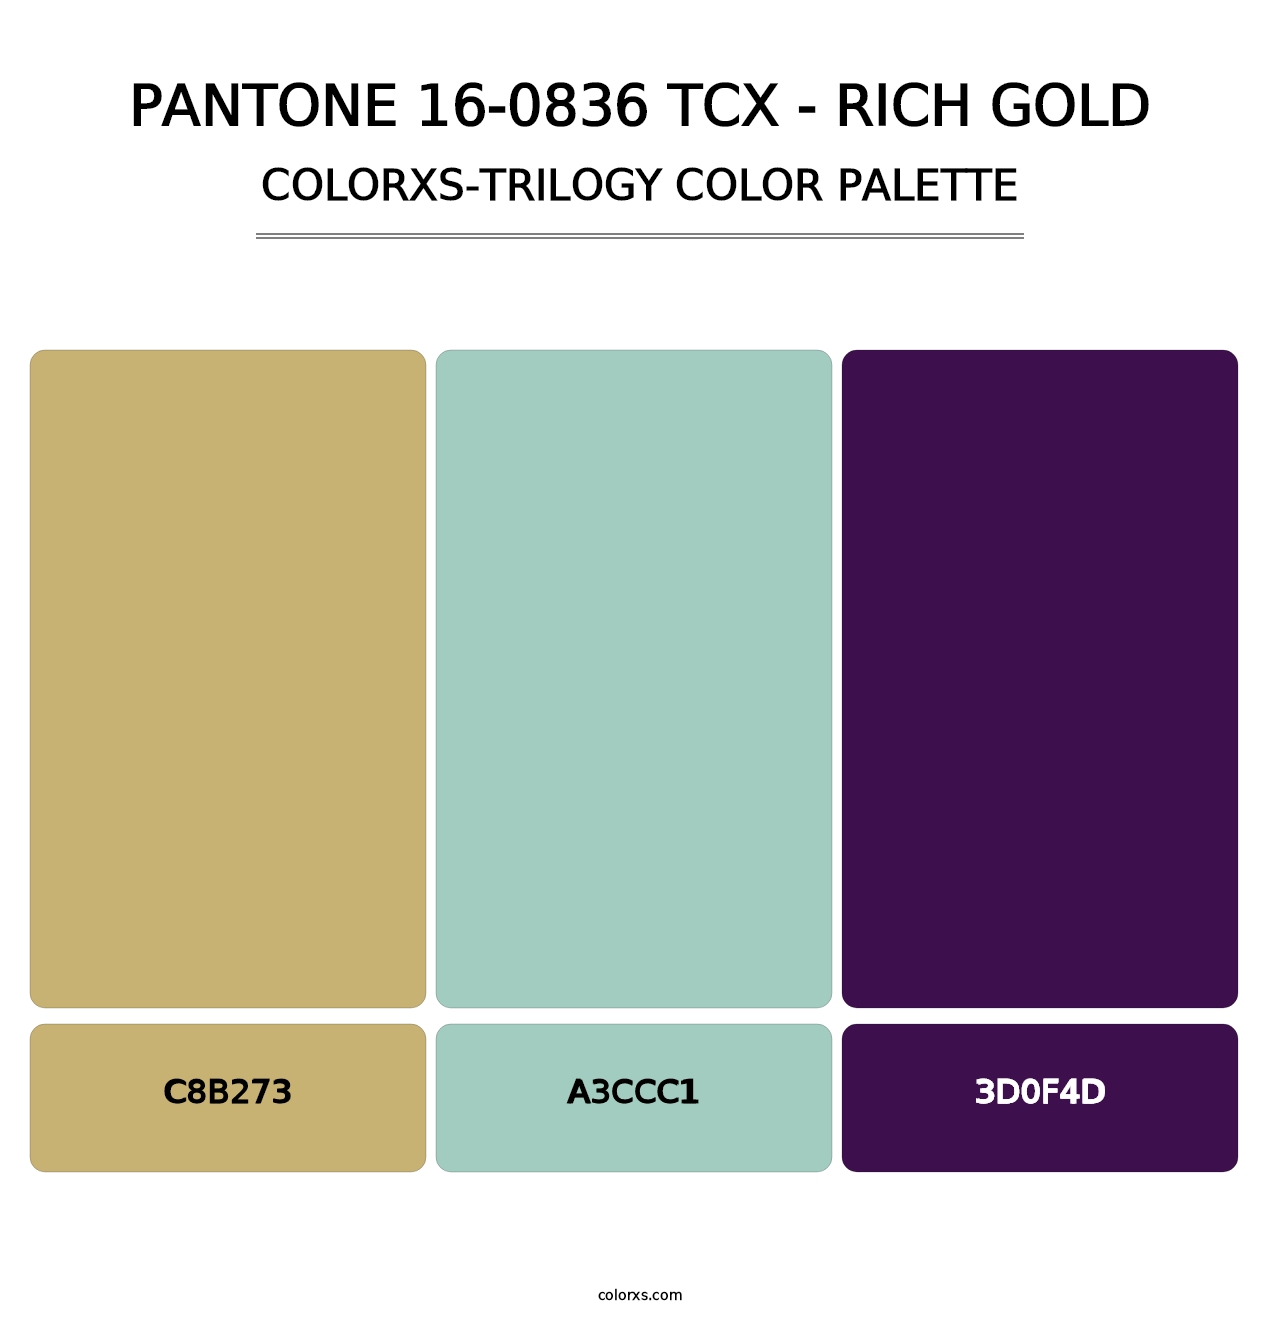 PANTONE 16-0836 TCX - Rich Gold - Colorxs Trilogy Palette